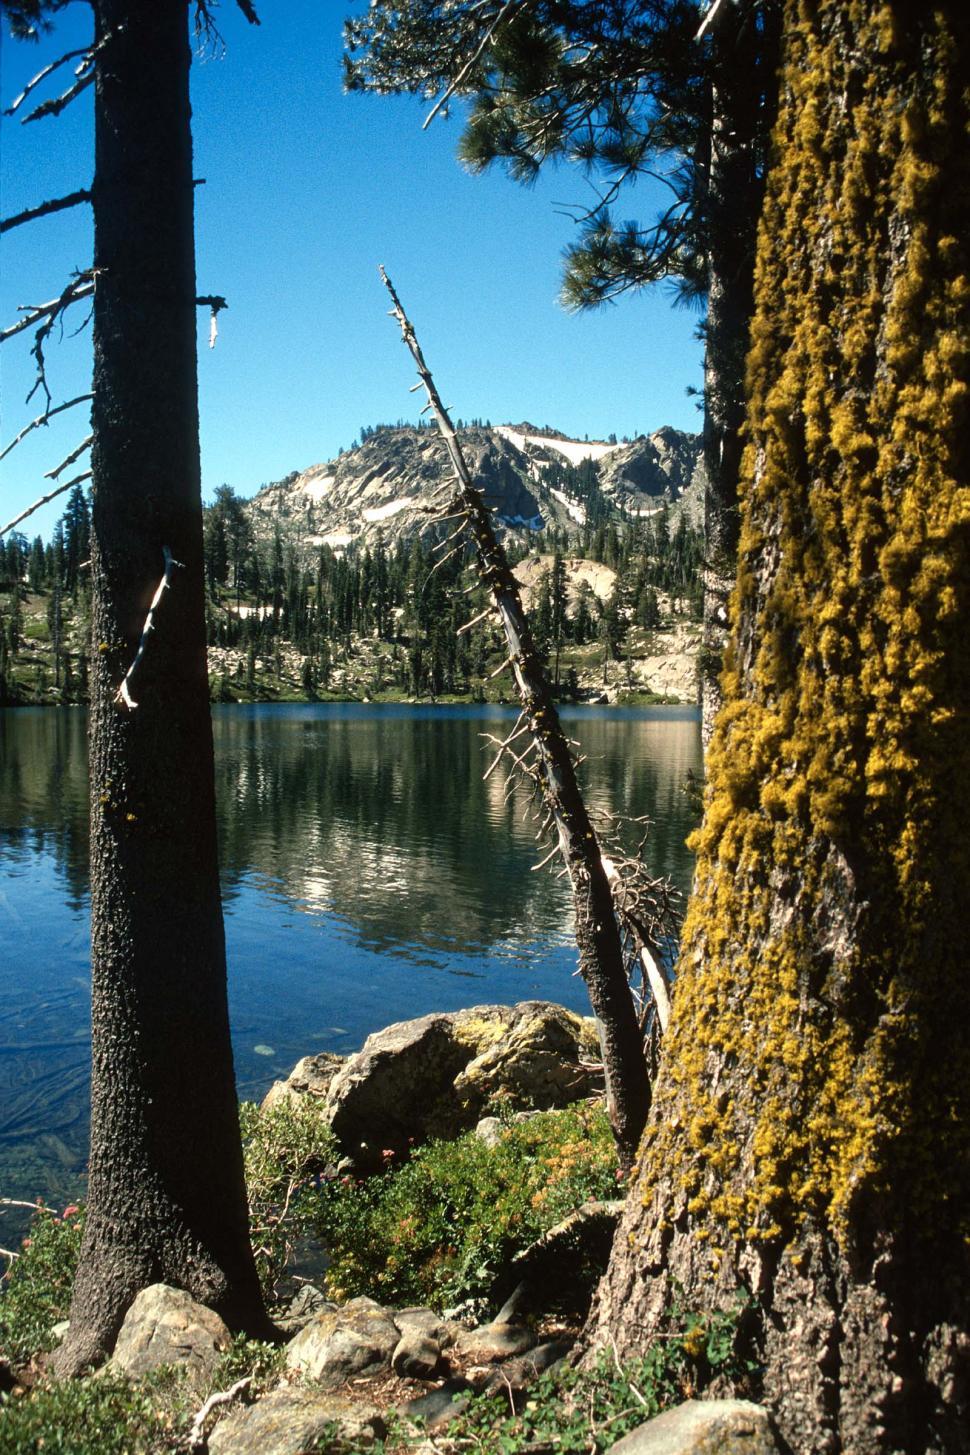 Free Image of Mountain lake and trees 